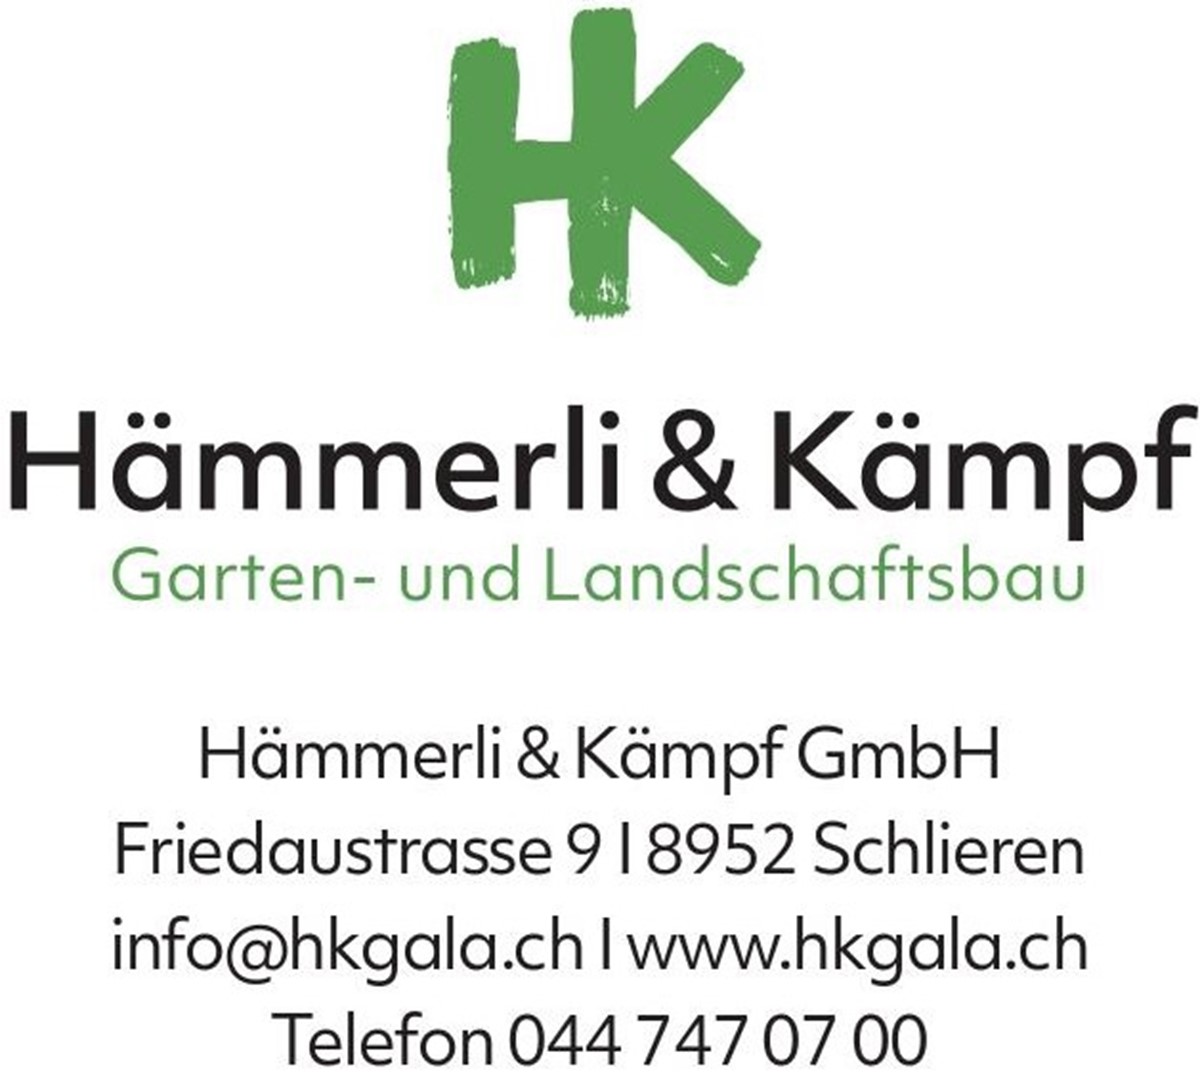 Hämmerli & Kämpf GmbH